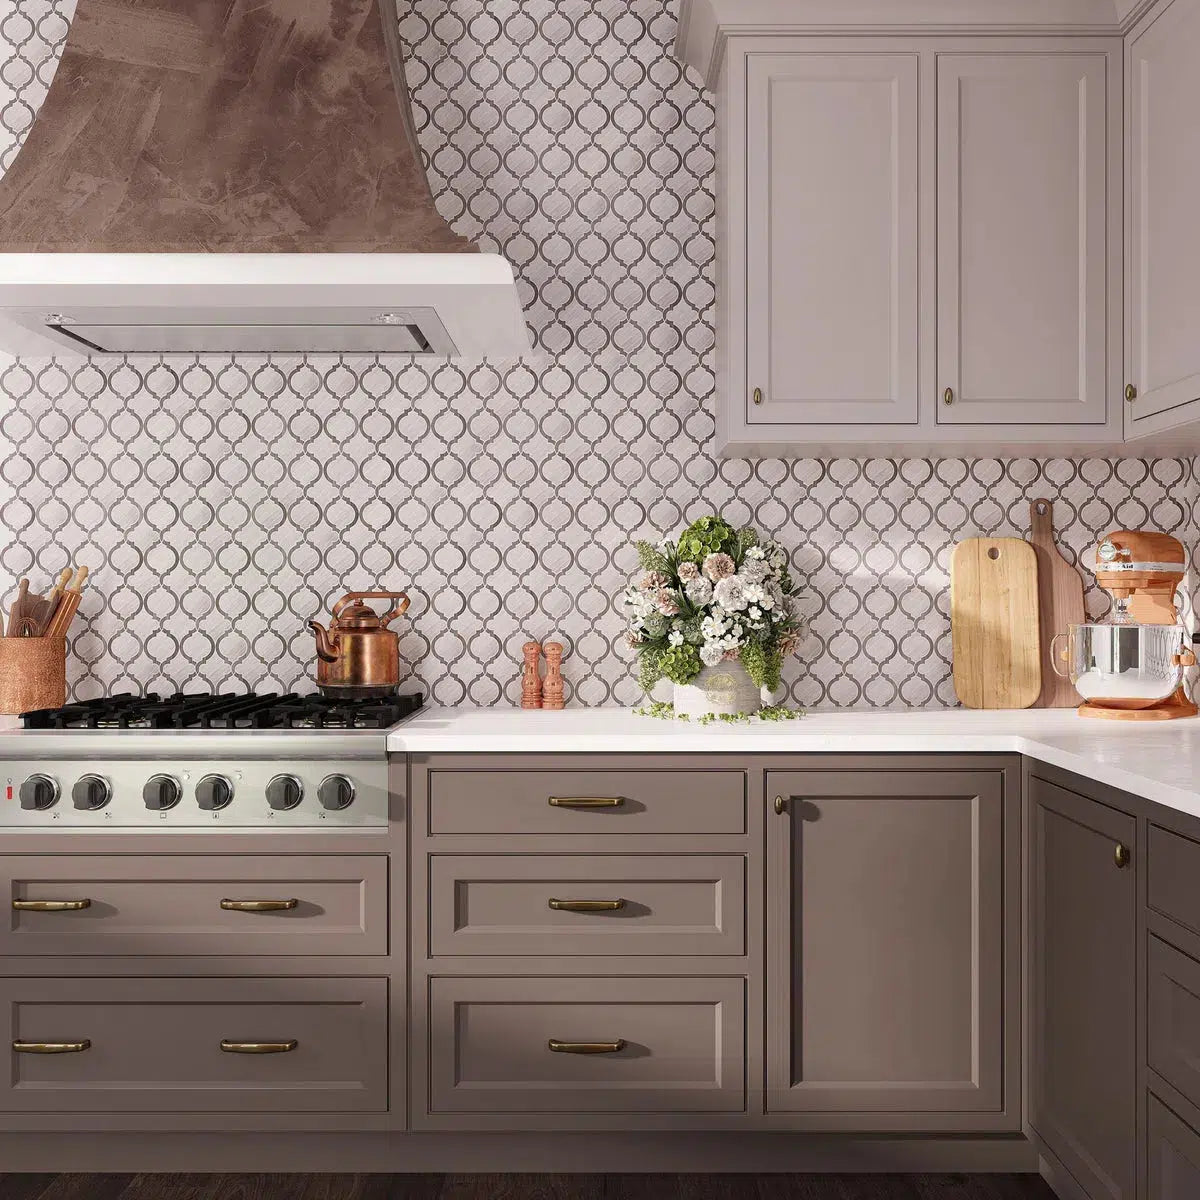 Rustic kitchen decor with arabesque wood look marble tile backsplash